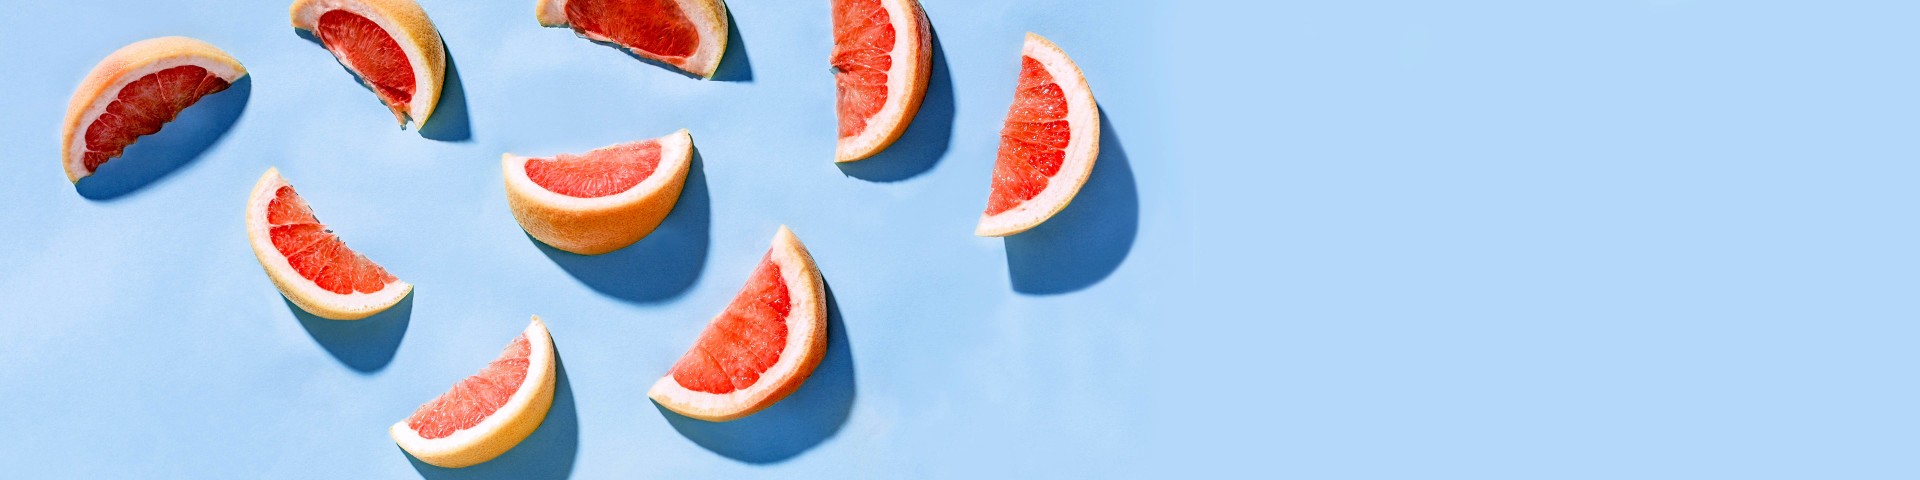 Grapefruit slices on a blue background.